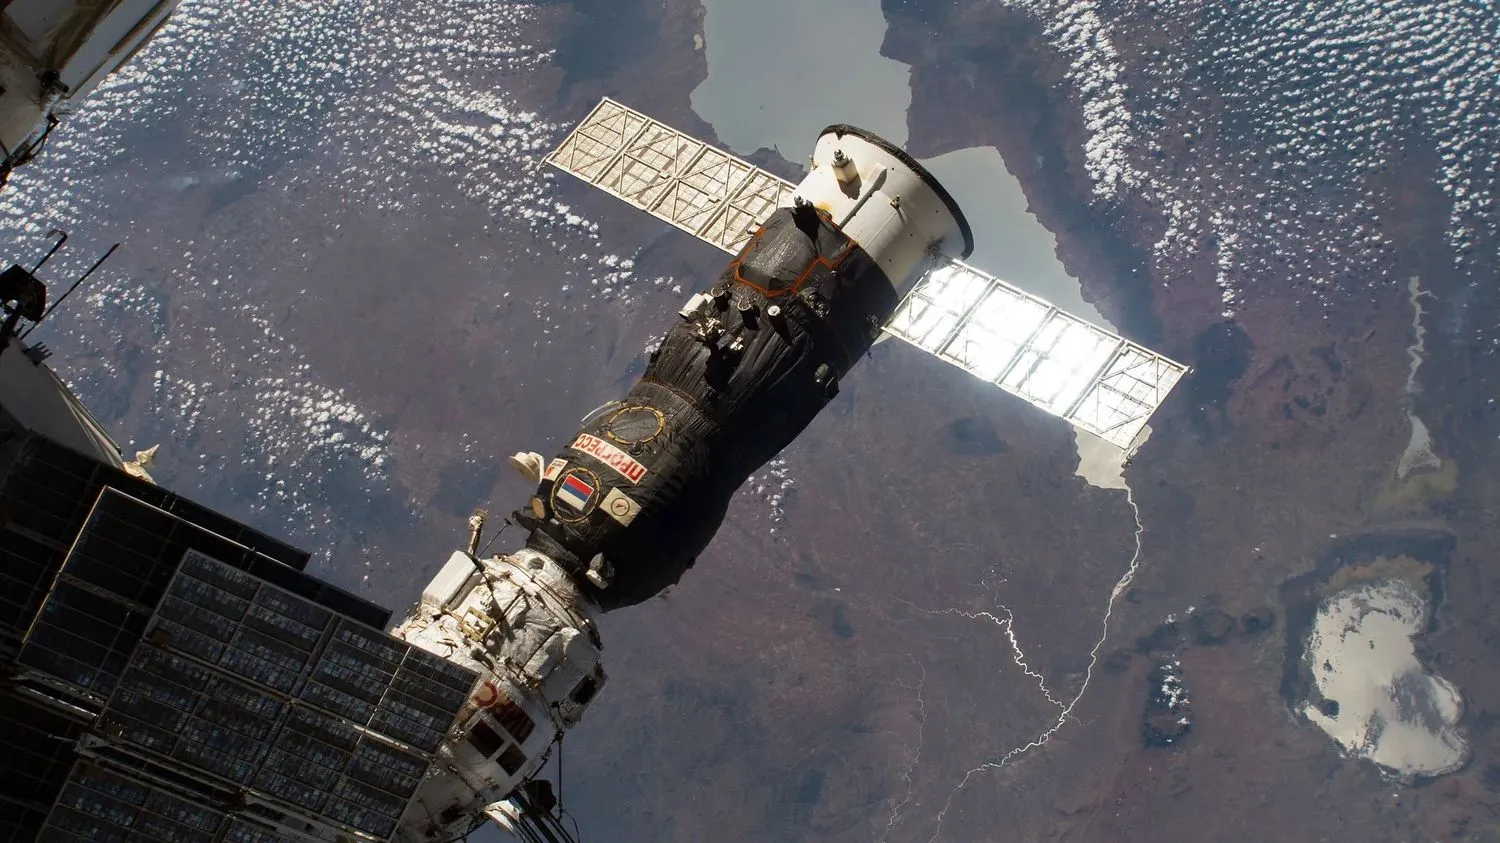 Mehr über den Artikel erfahren Beobachtung der Ankunft des russischen Progress-Frachters an der ISS am 17. Februar